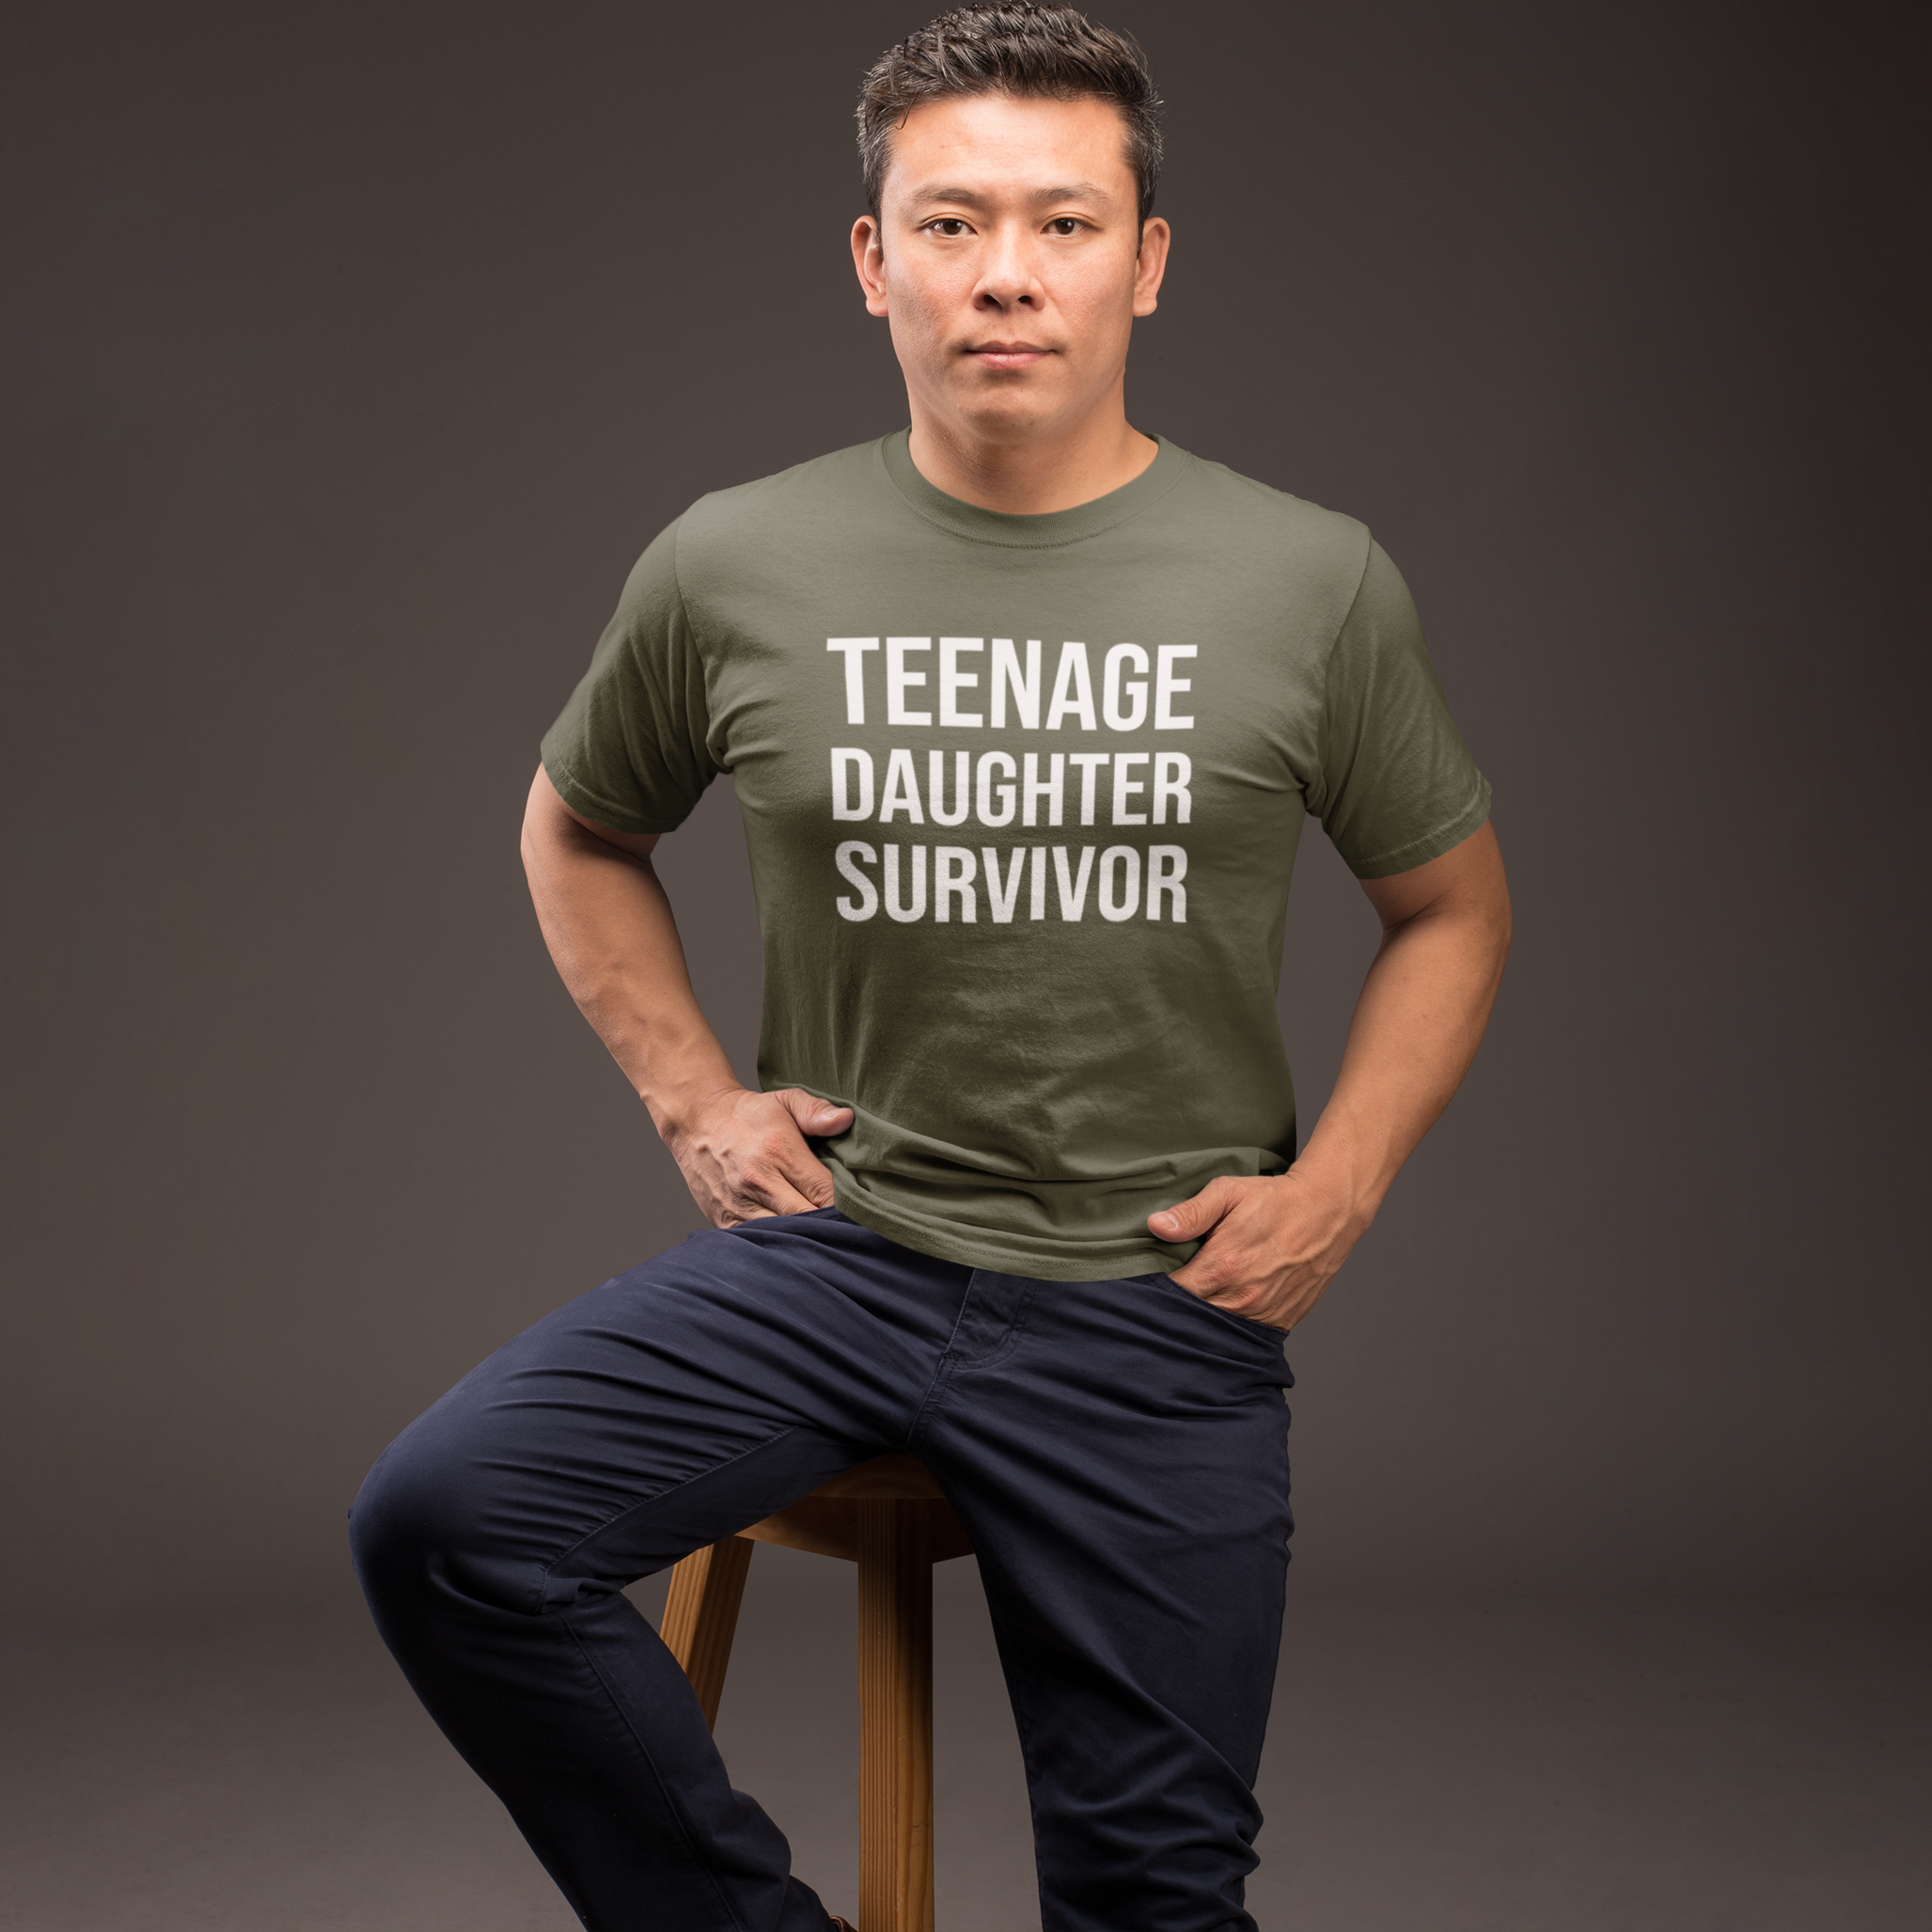 'Teenage daughter survivor' adult shirt